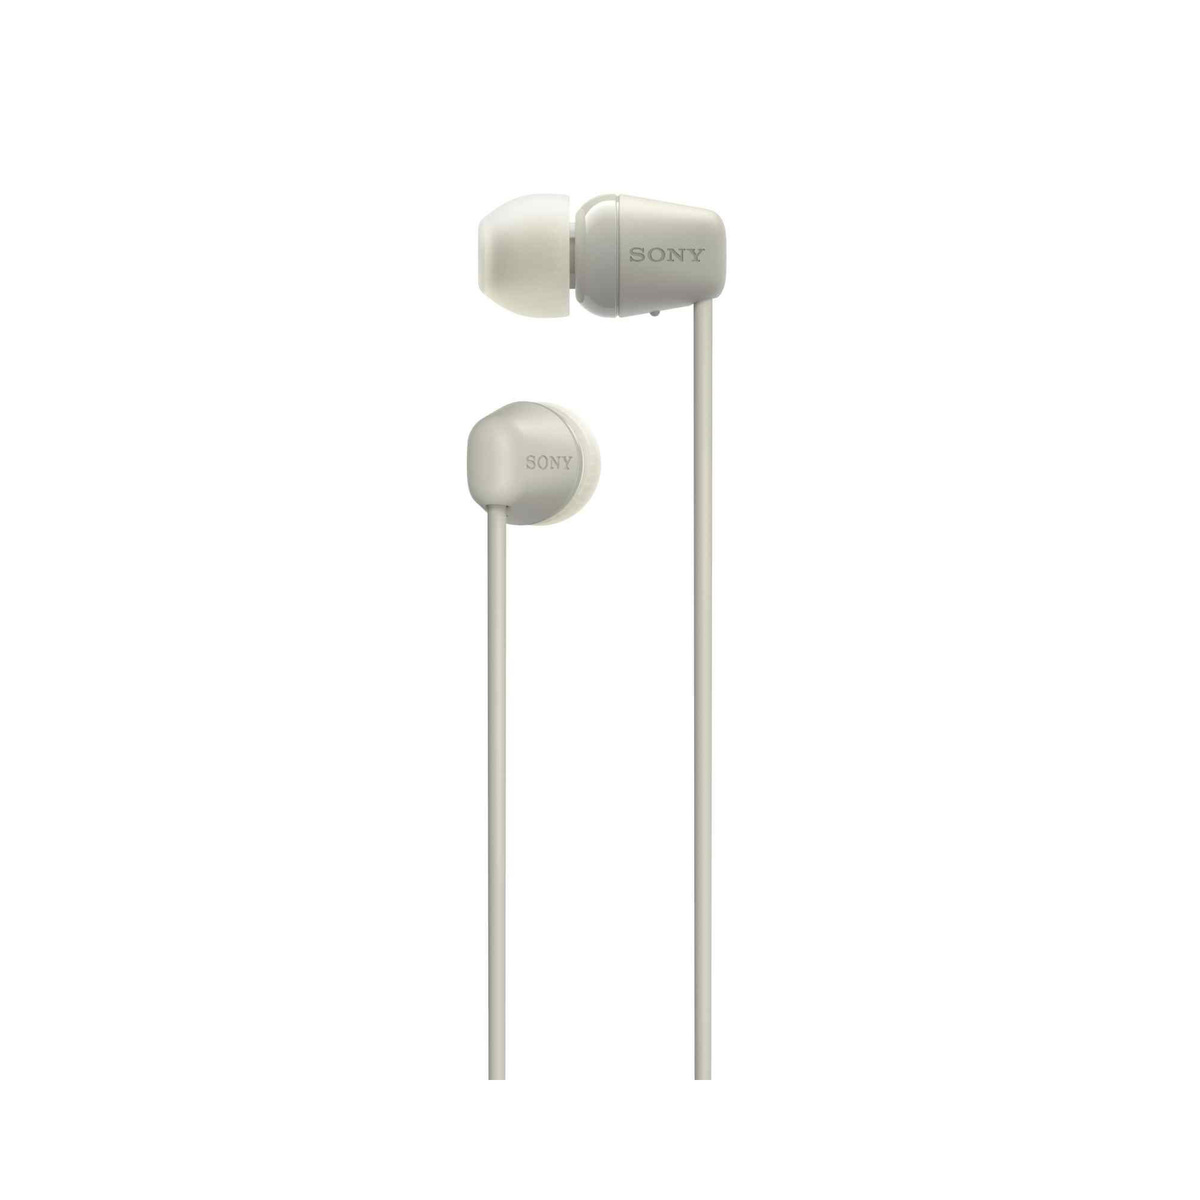 Sony In-Ear Bluetooth Headphones, Beige (Taupe), WI-C100/CZ